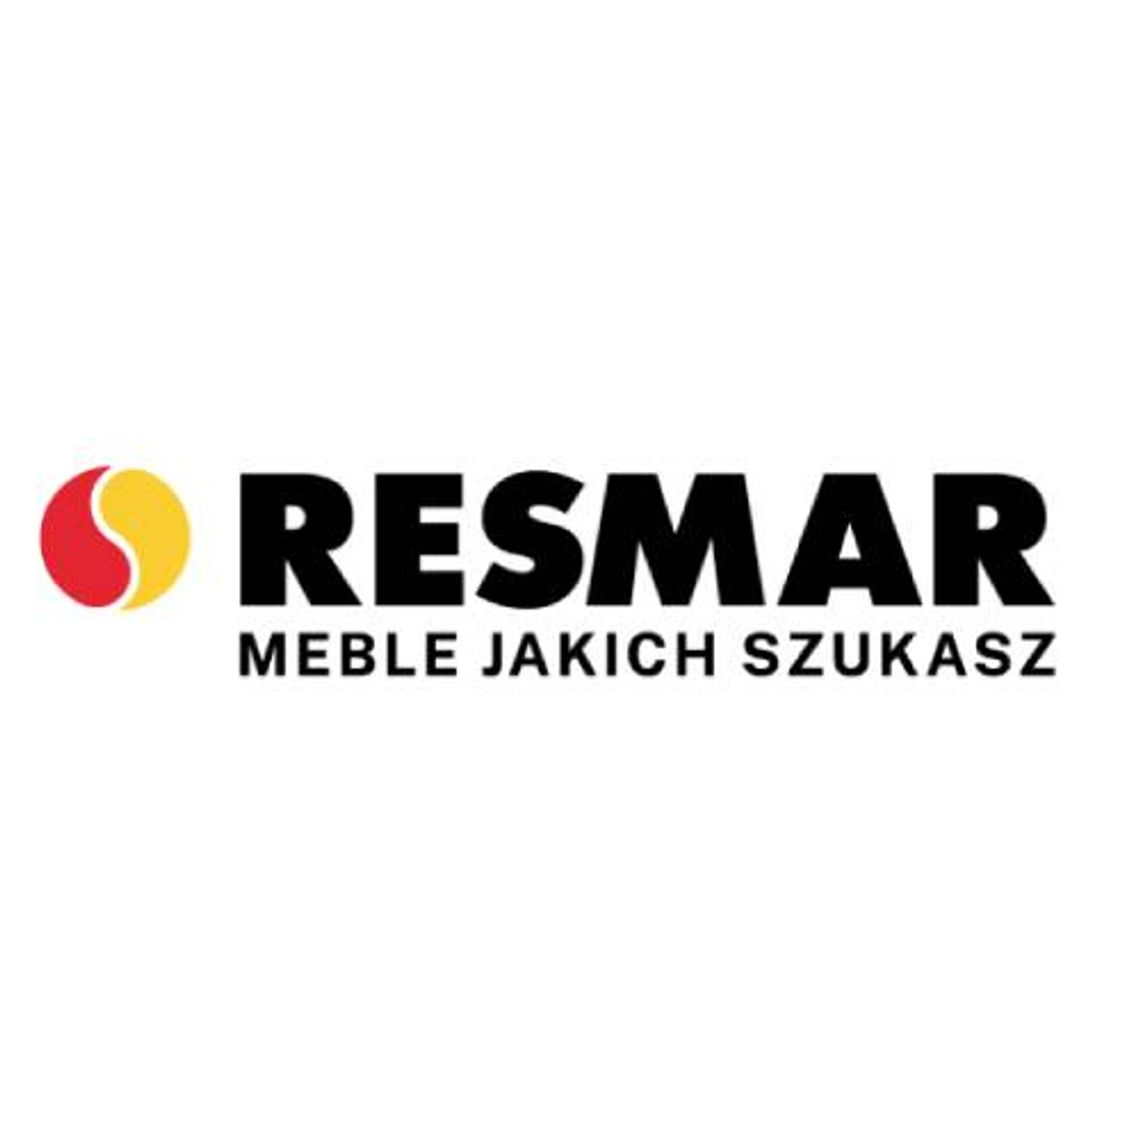 Resmar.pl - meble biurowe, skórzane, kuchenne